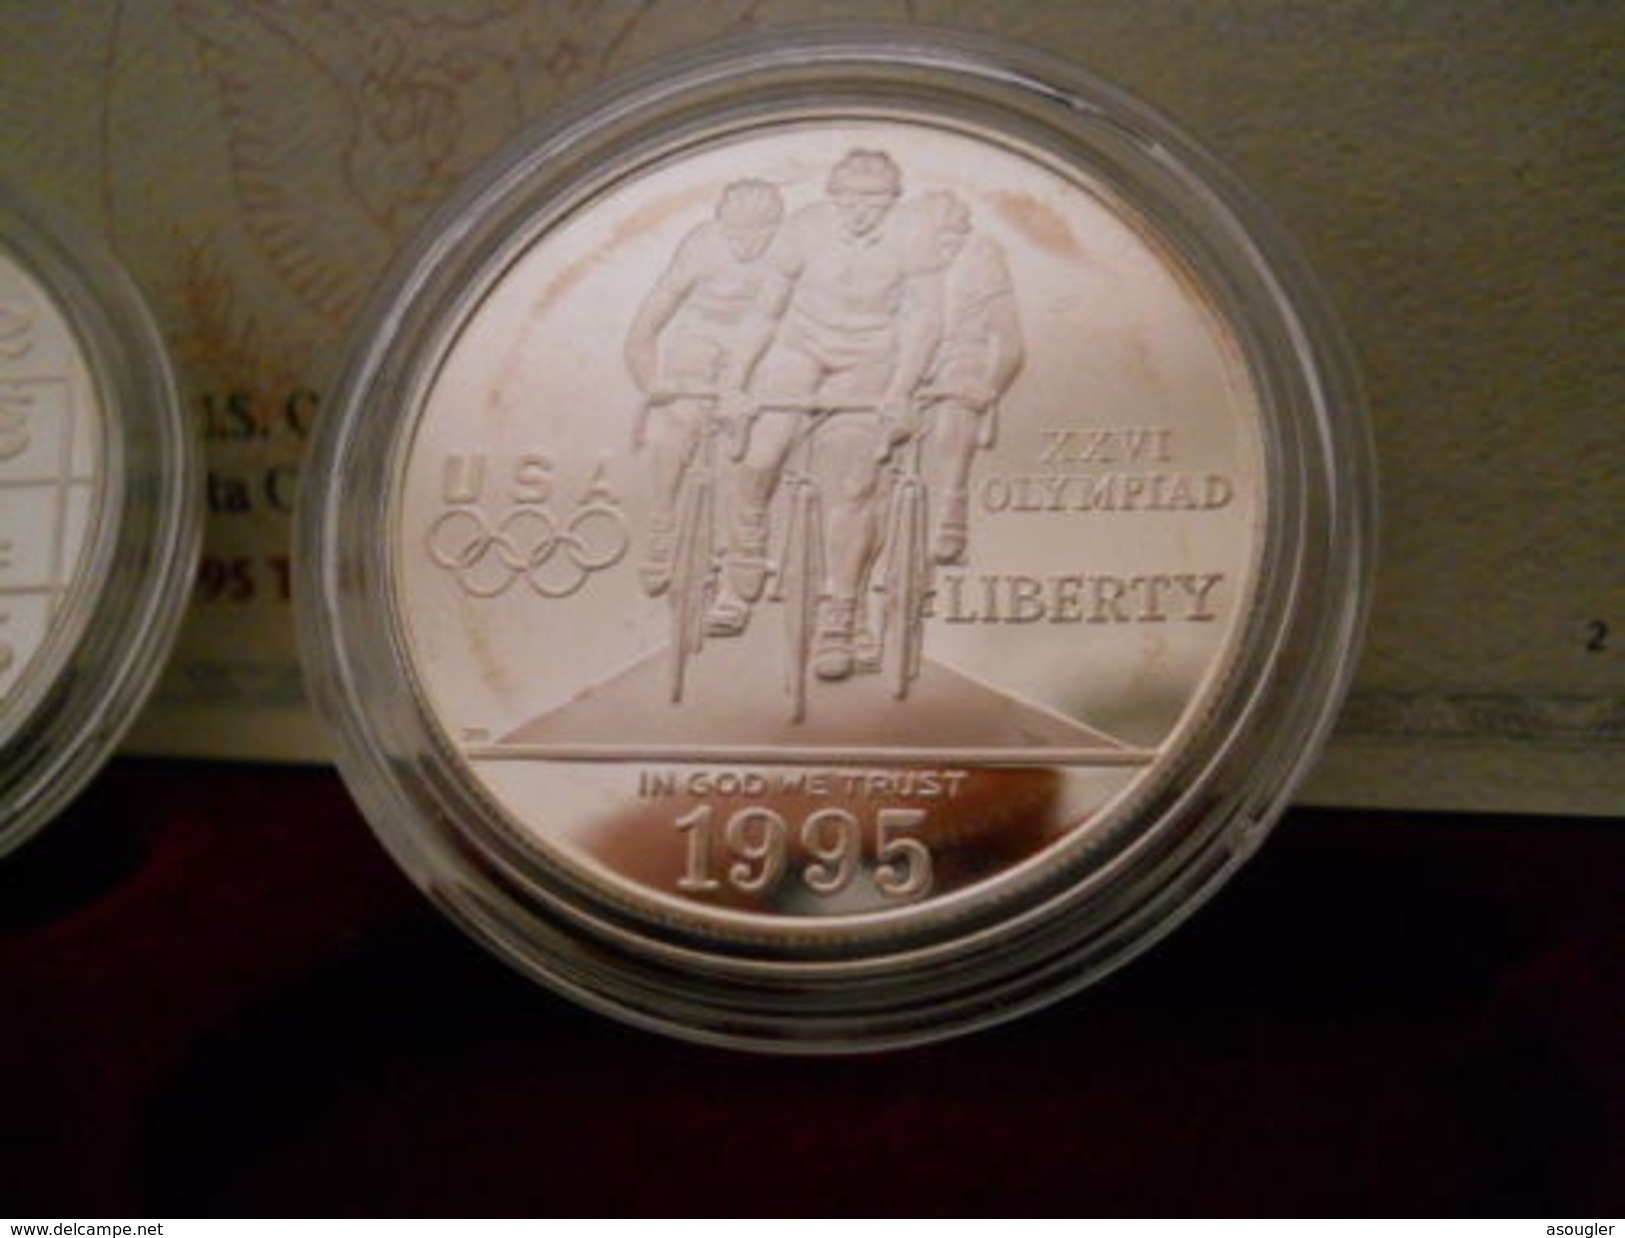 USA 2 X 1 DOLLAR $ SILVER PROOF 1995 P ATLANTA CENTENNIAL OLYMPIC GAMES - Commemorative